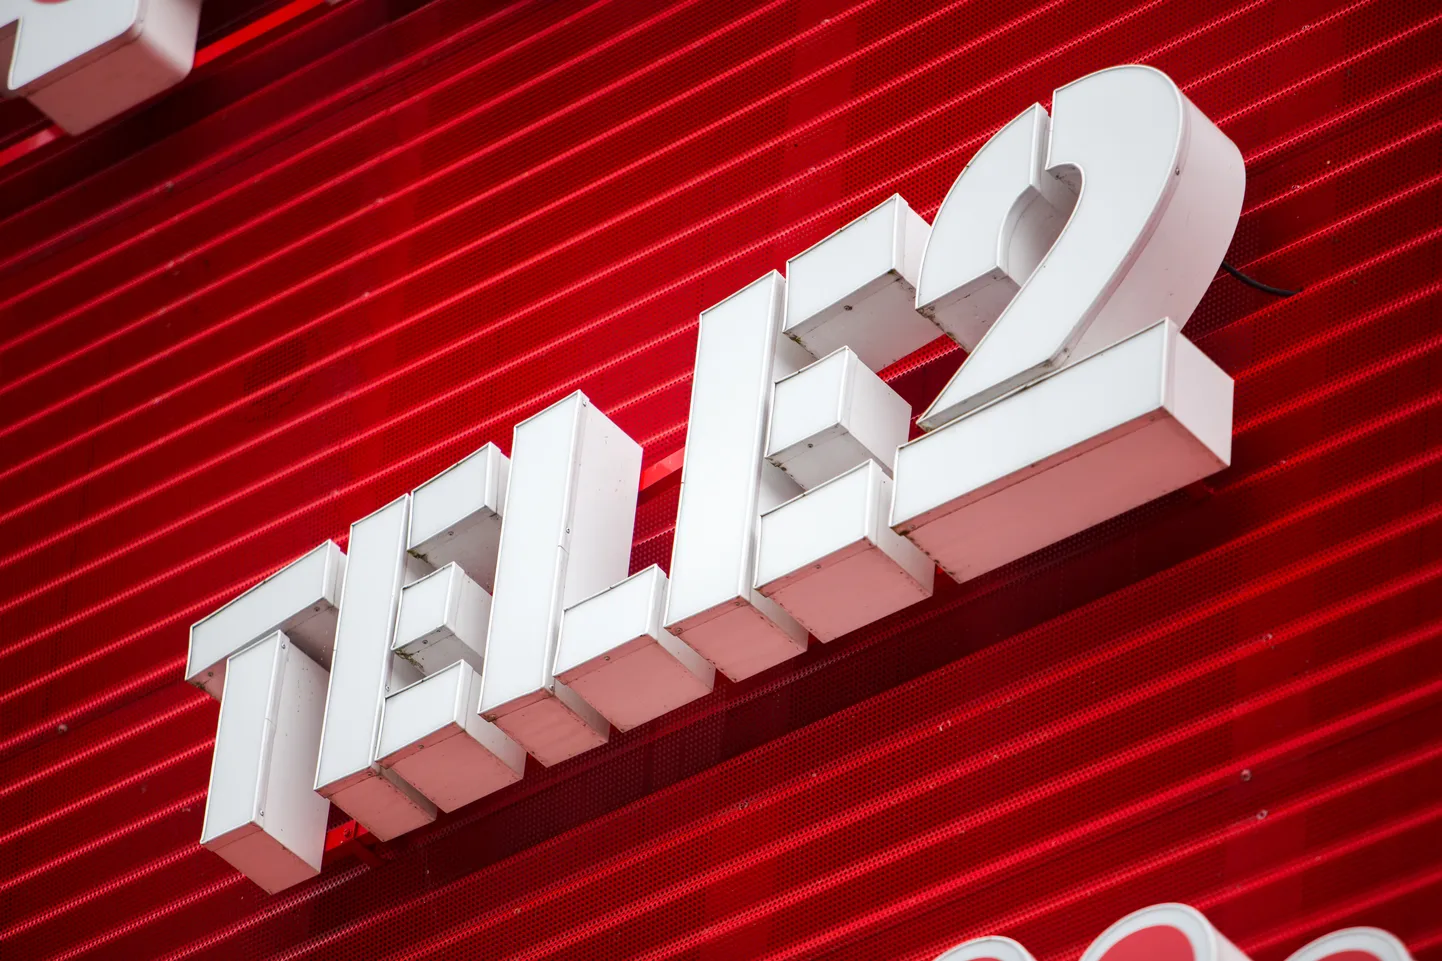 Логотип Tele2. Иллюстративное фото.